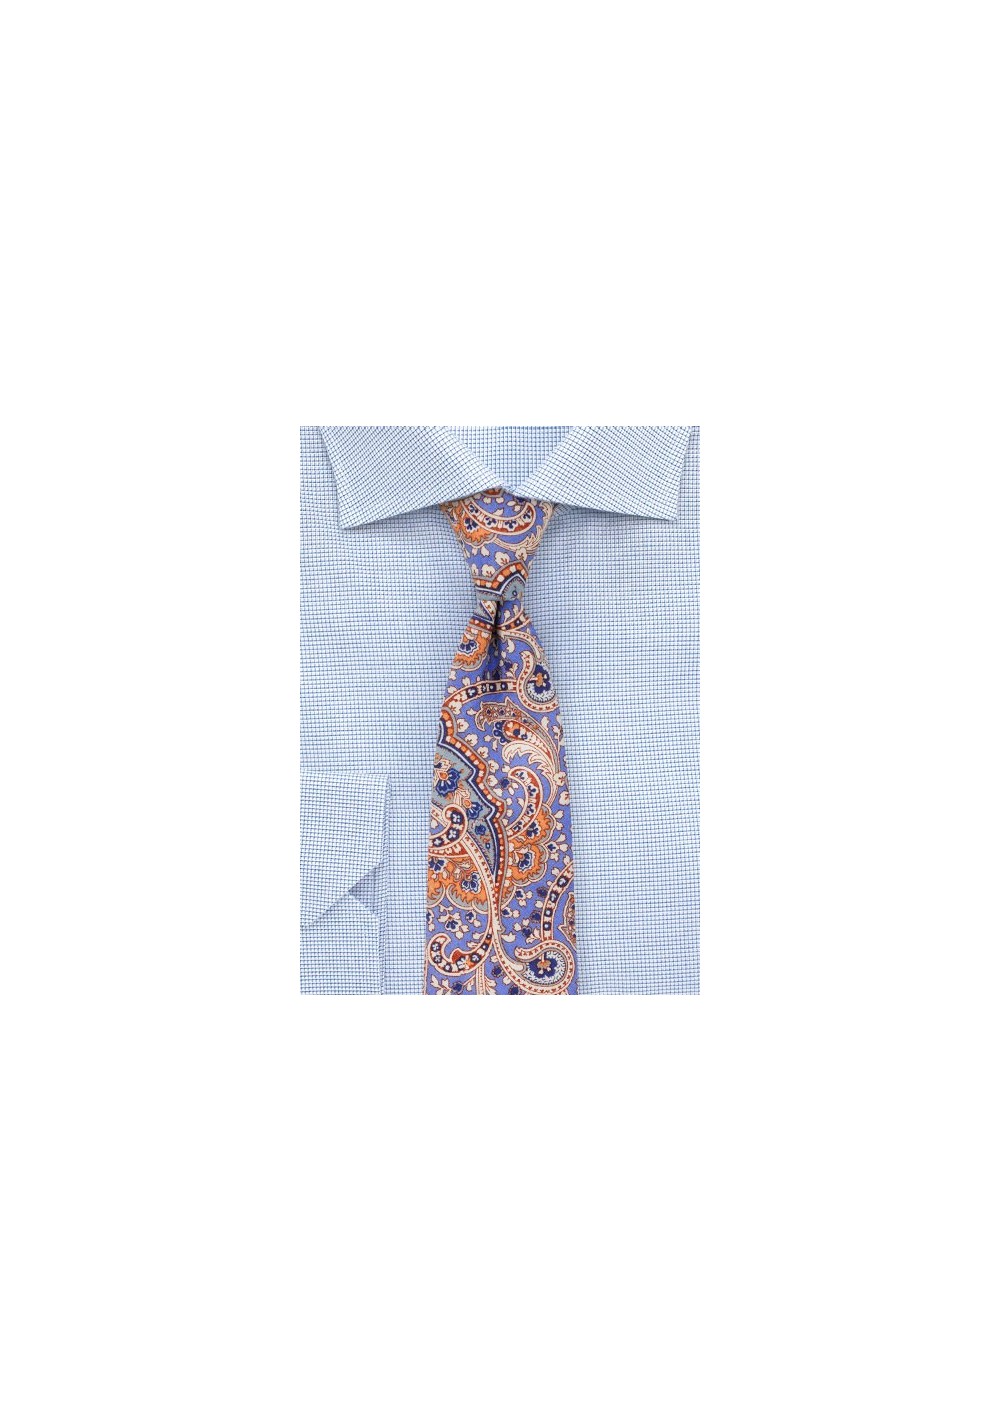 Cotton Paisley Tie in Pastel Blue and Orange